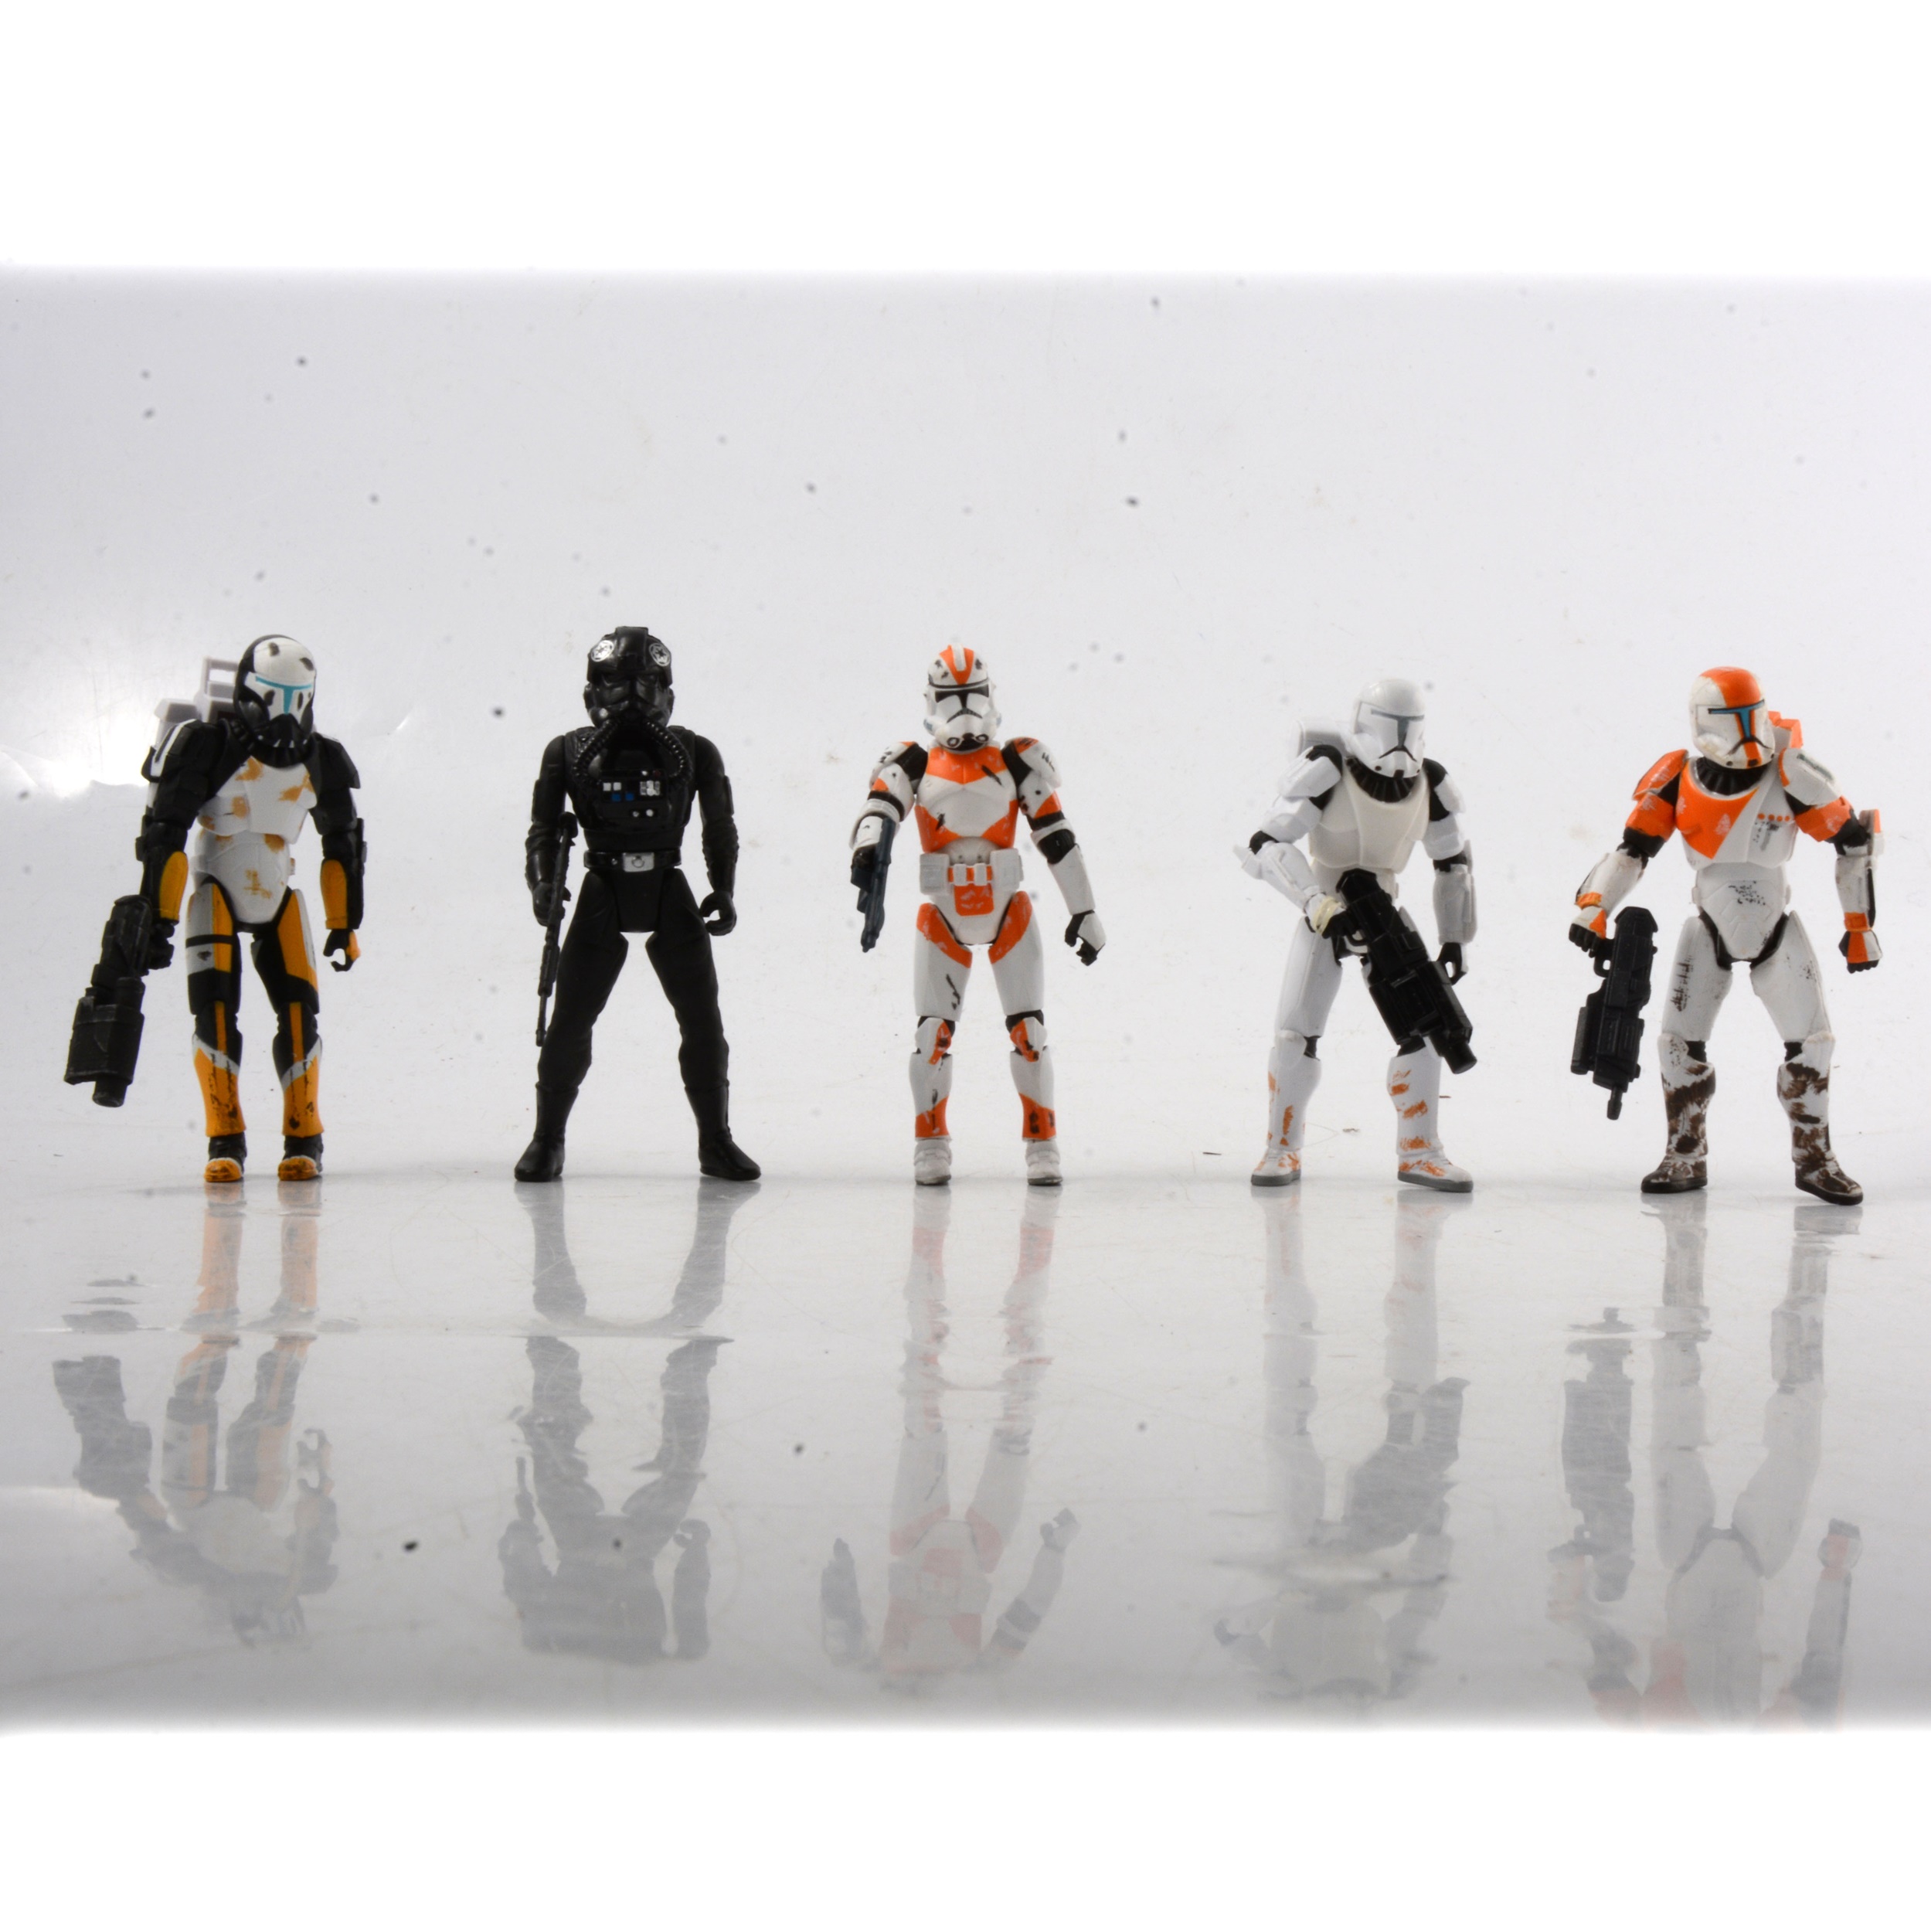 Hasbro Star Wars Black Series figures and Sith Infiltrator. - Image 2 of 2